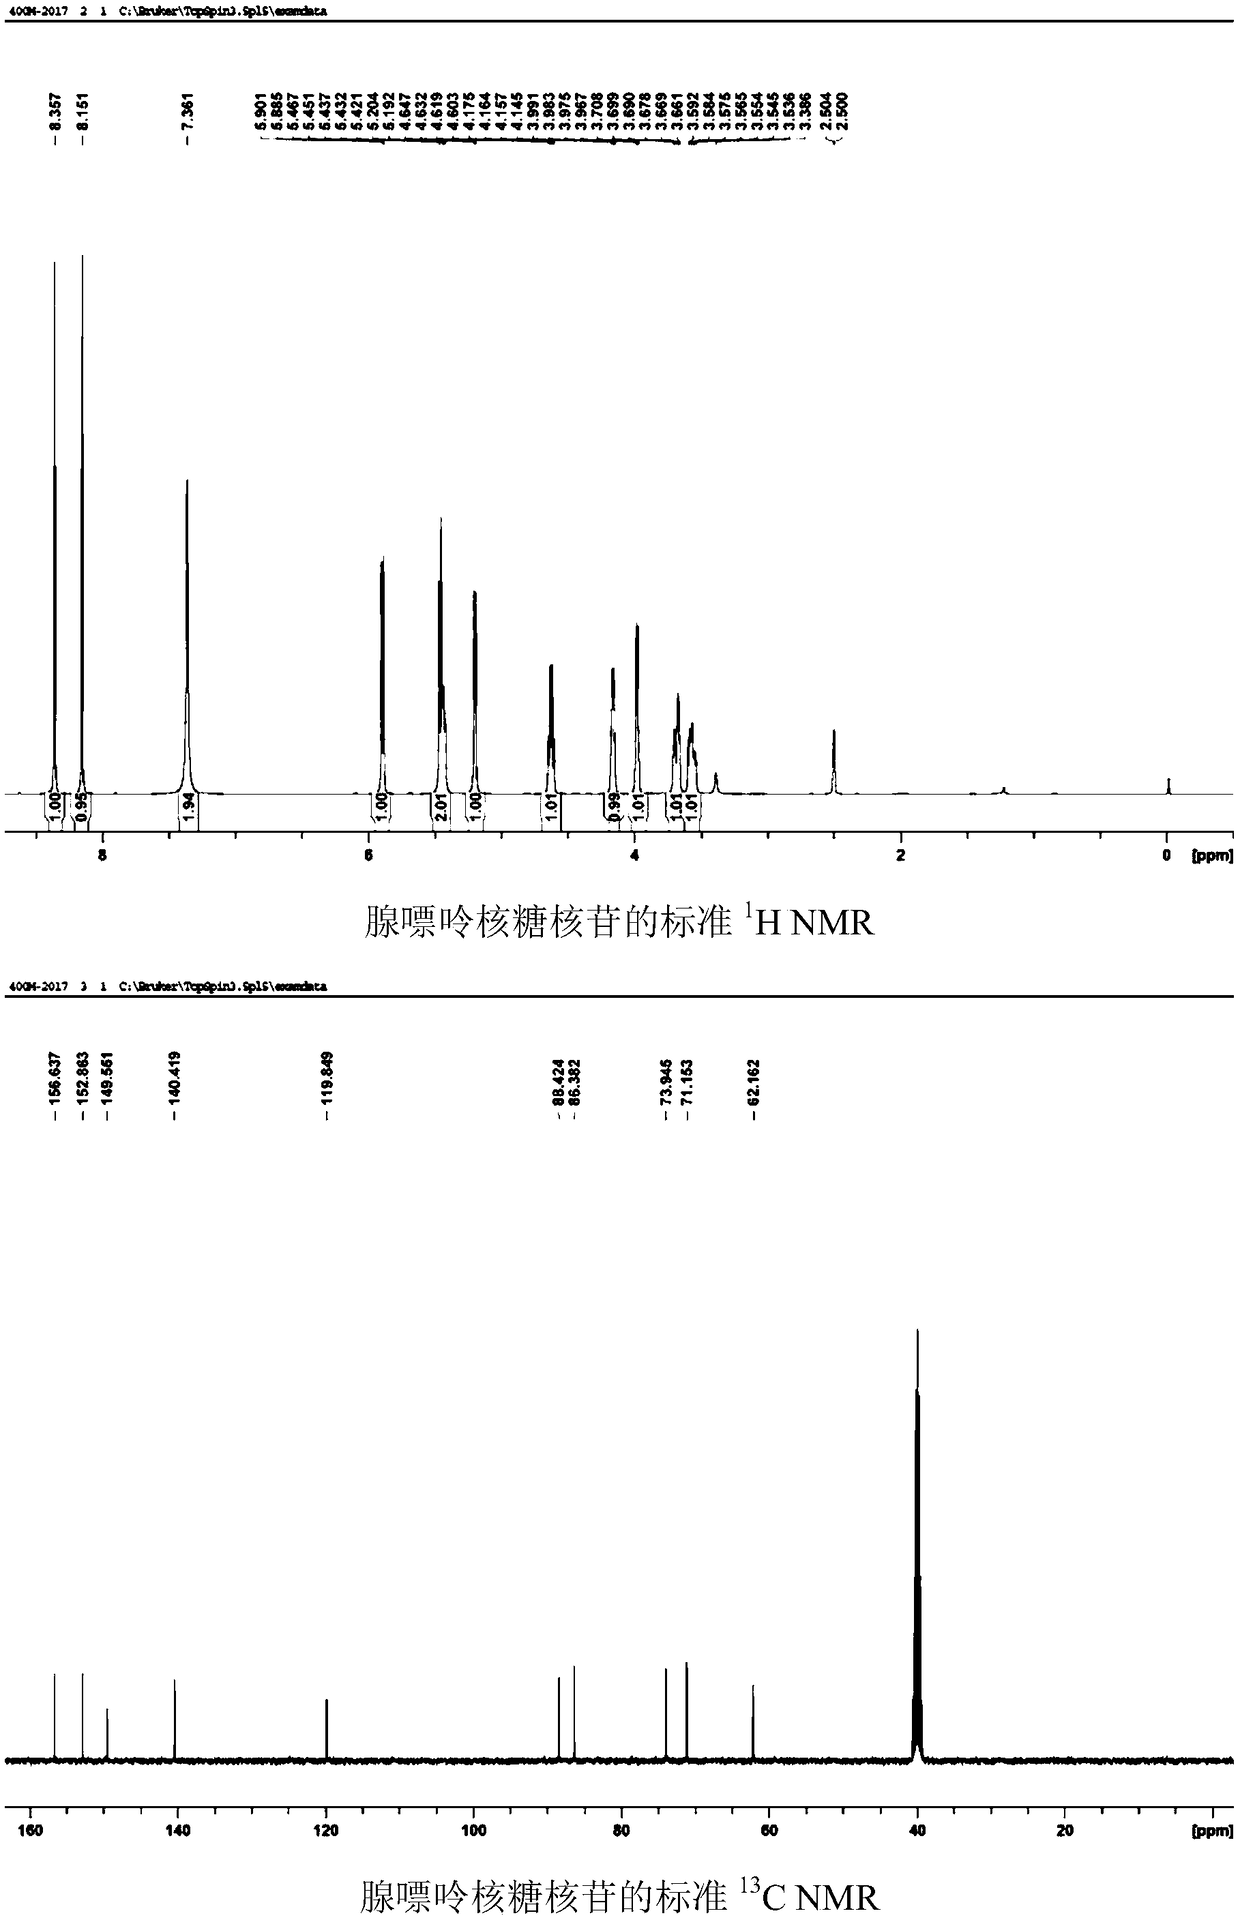 Photochemical demethylation of n6-methyladenine